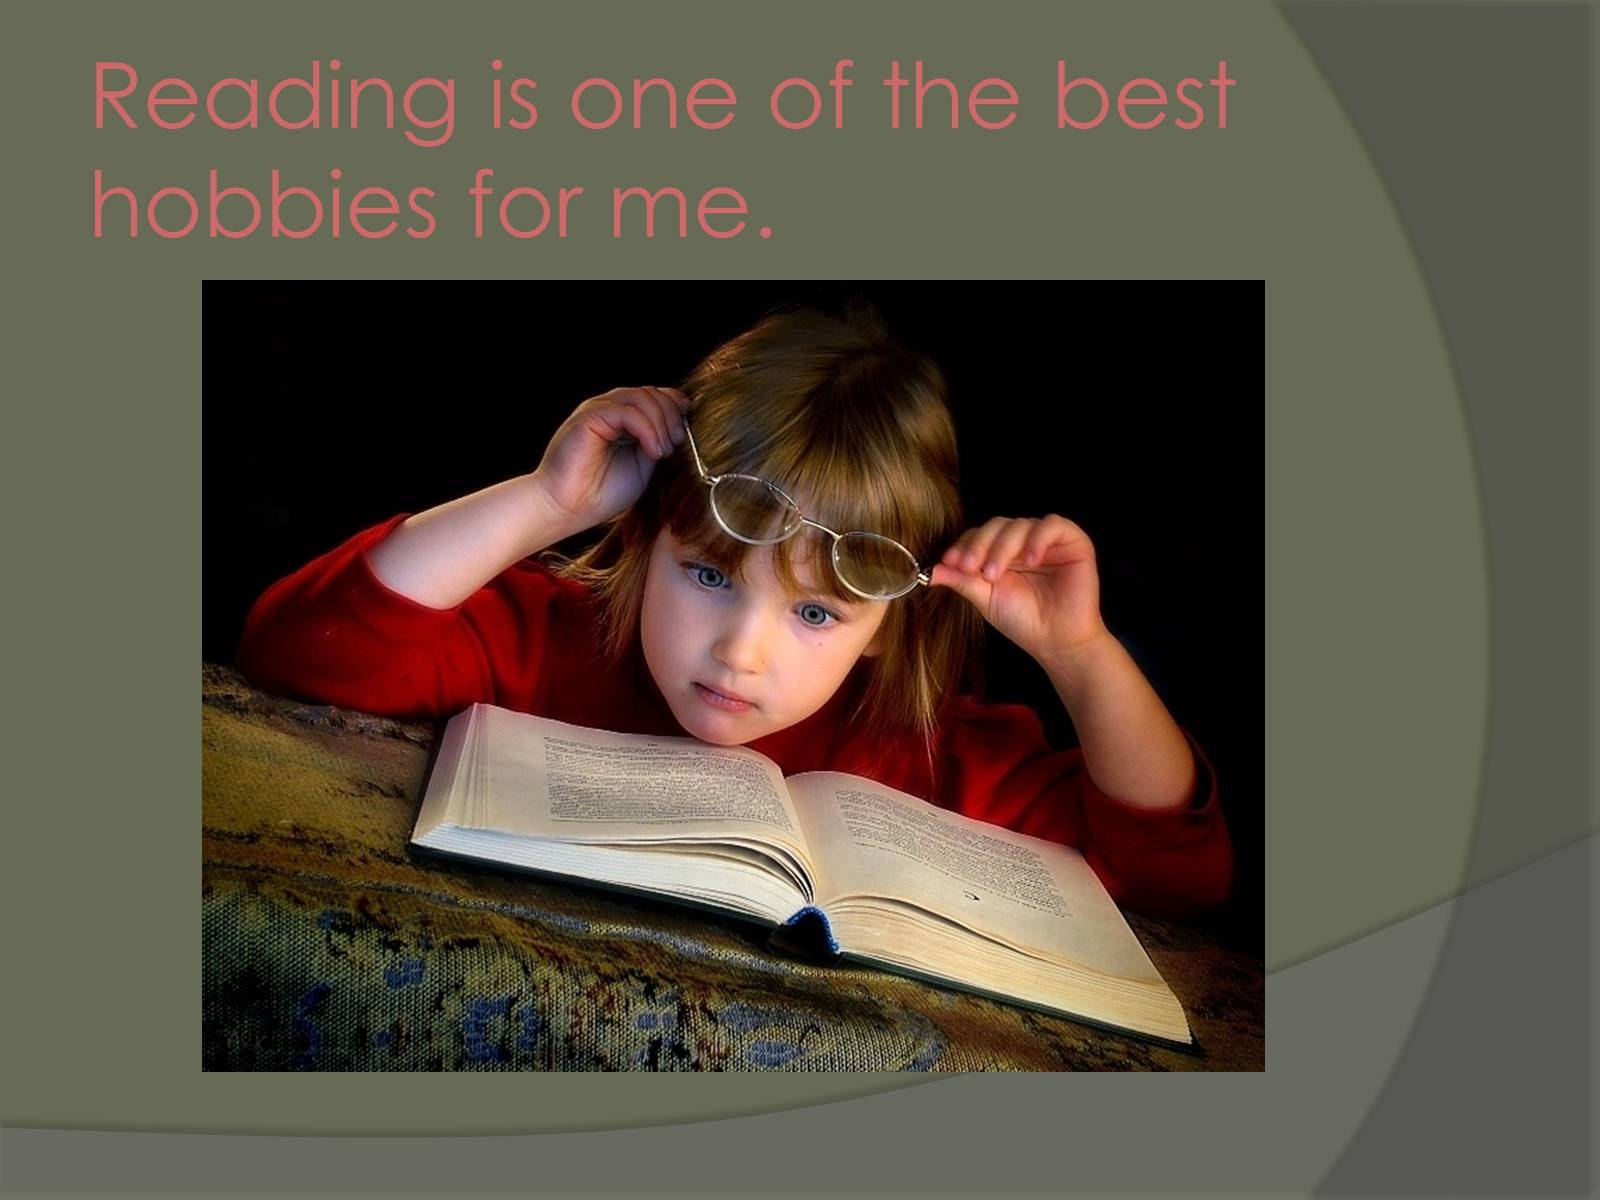 My hobby is read books. Хобби чтение слайд. Слайды на тему чтение хобби. Мое хобби чтение книг на английском. Мое хобби чтение книг презентация.